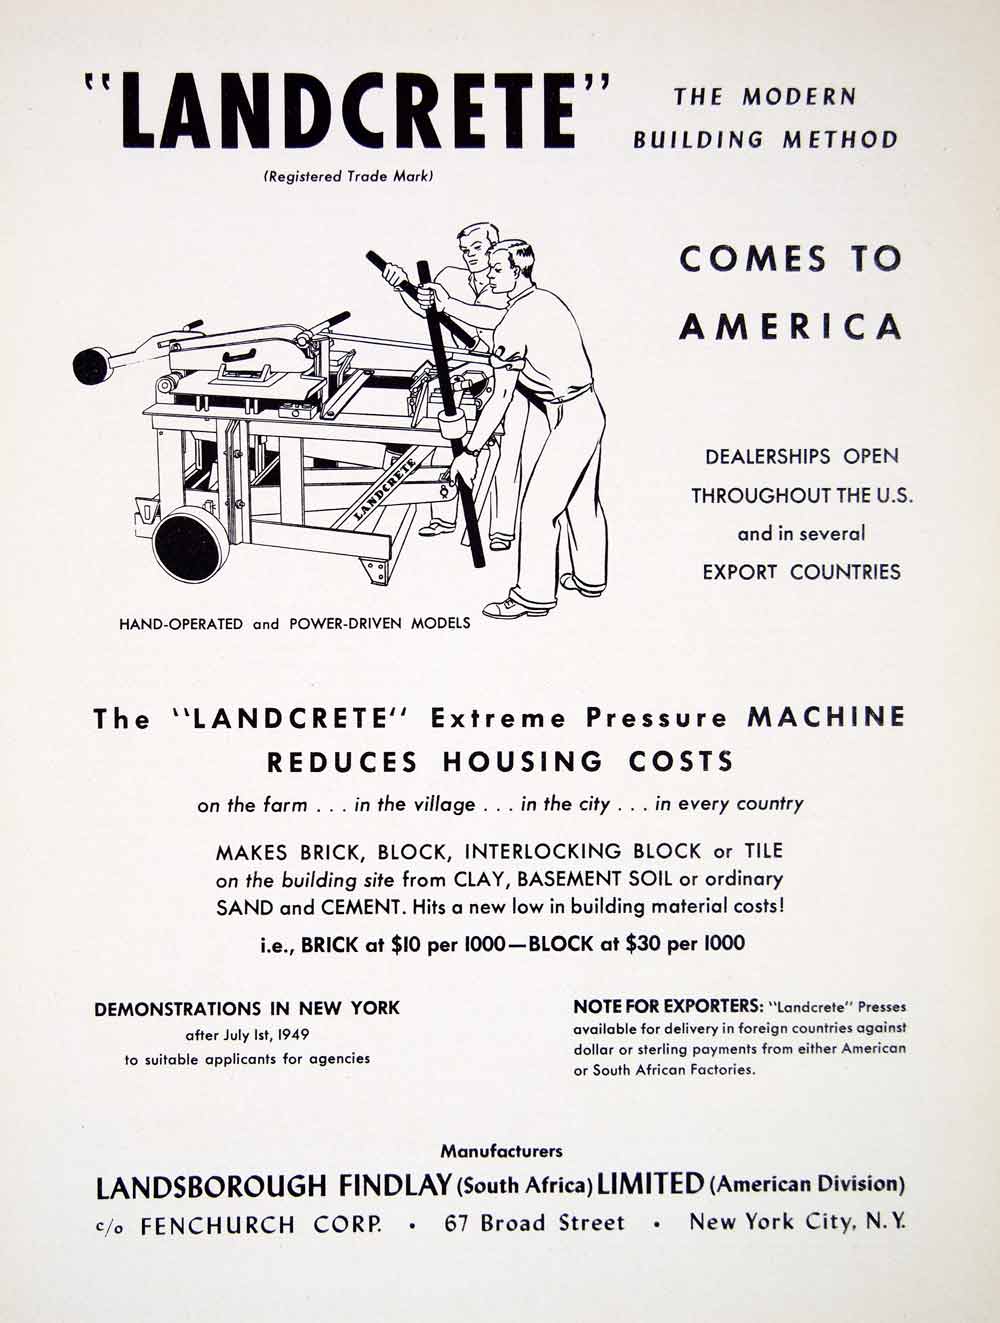 1949 Ad Landcrete Landsborough Findlay Limited Fenchurch Brick Cement Sand XGTC8